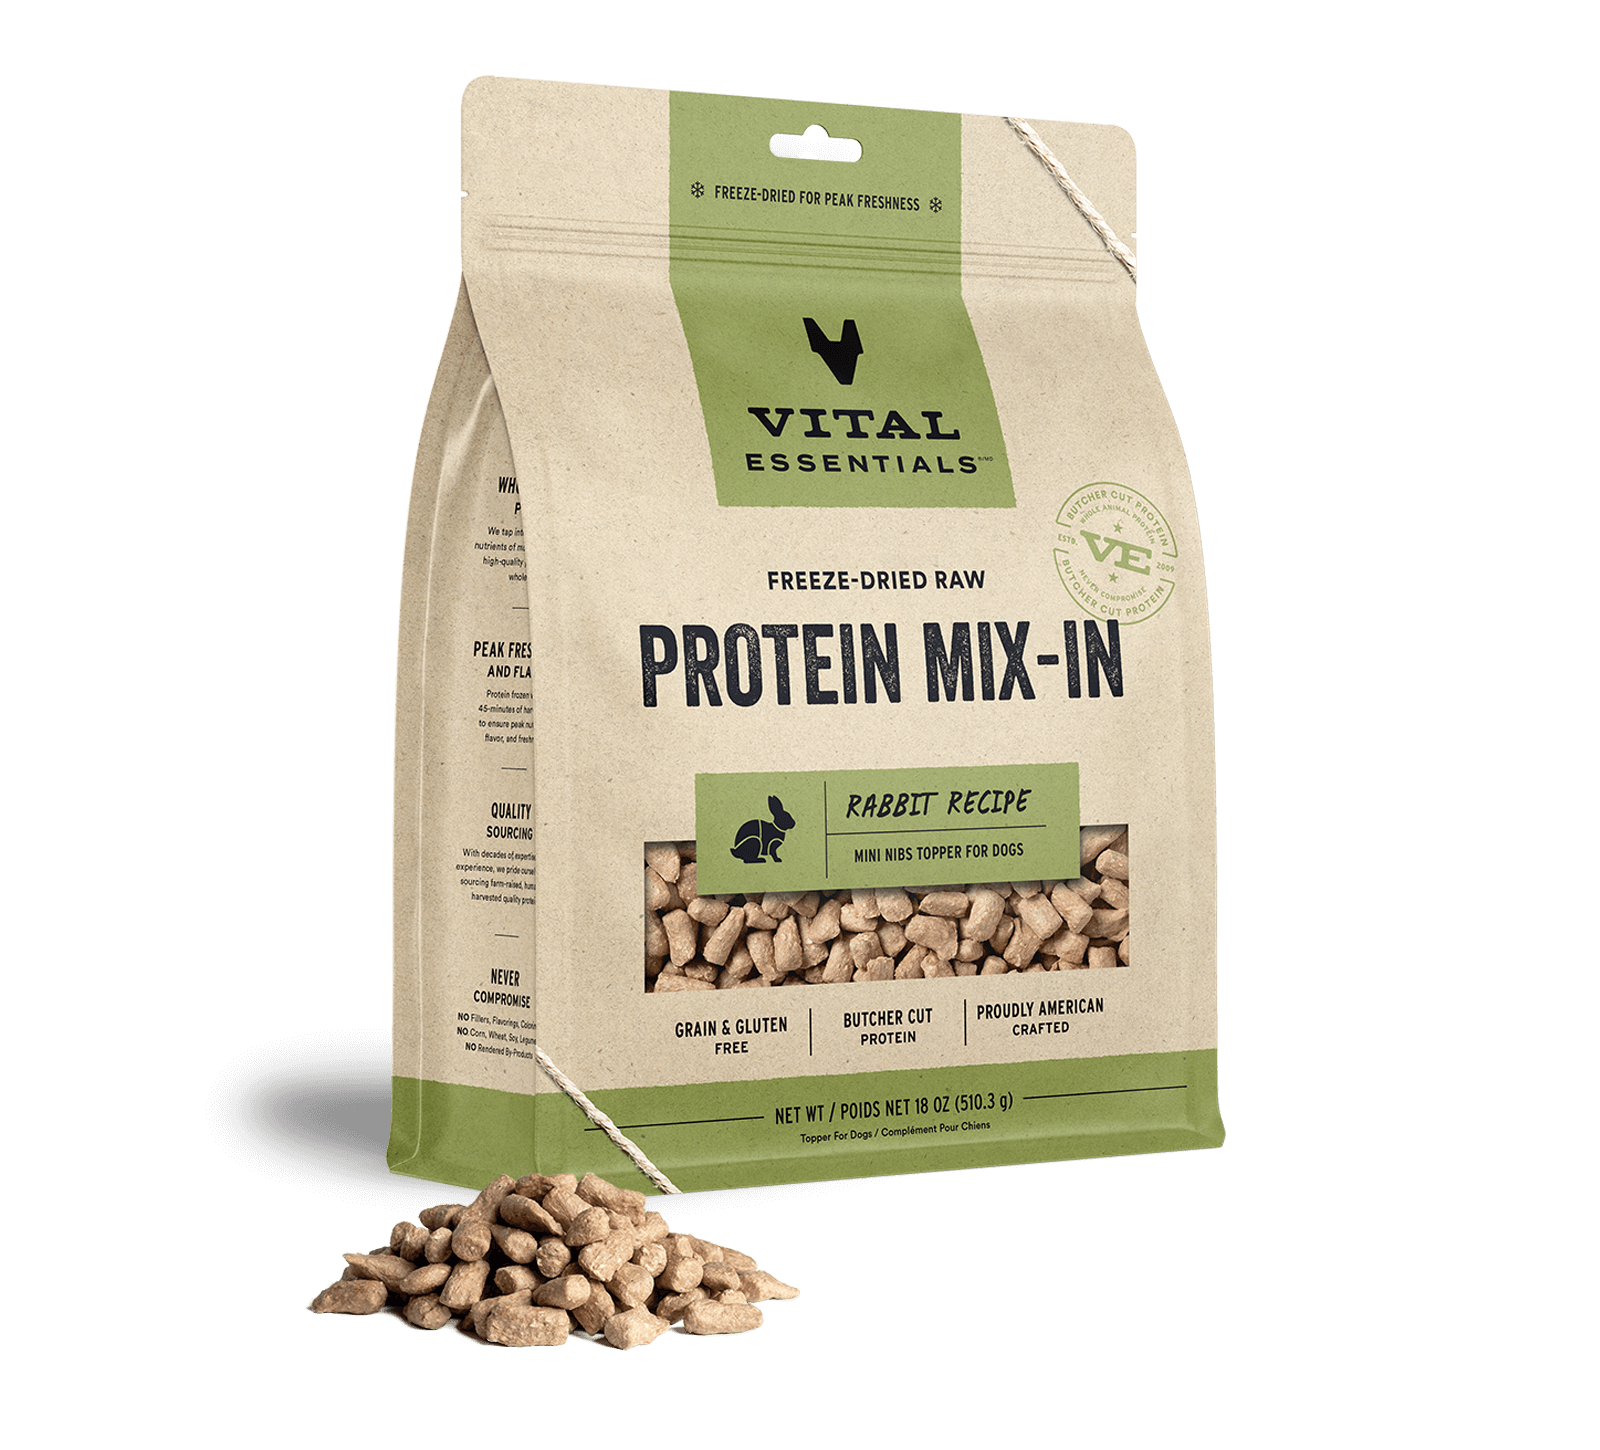 Vital Essentials Freeze-Dried Raw Protein Mix-In Rabbit Recipe Mini Nibs Topper for Dogs, 18 oz - Treats